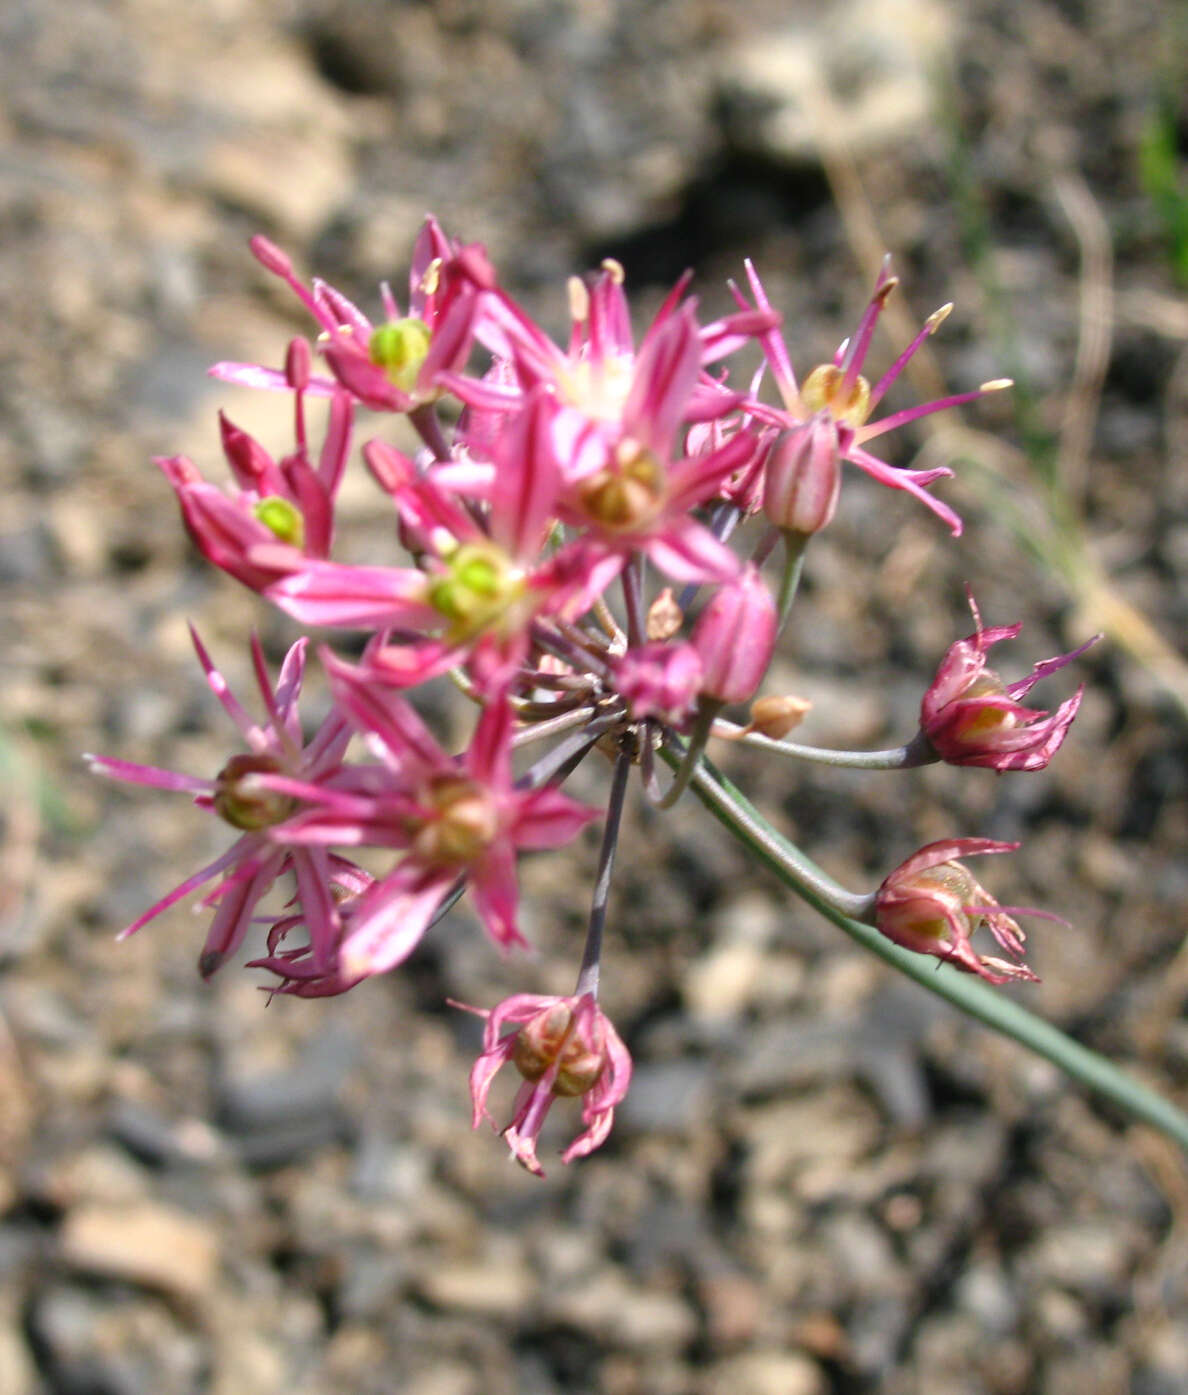 Image of Allium samurense Tscholok.